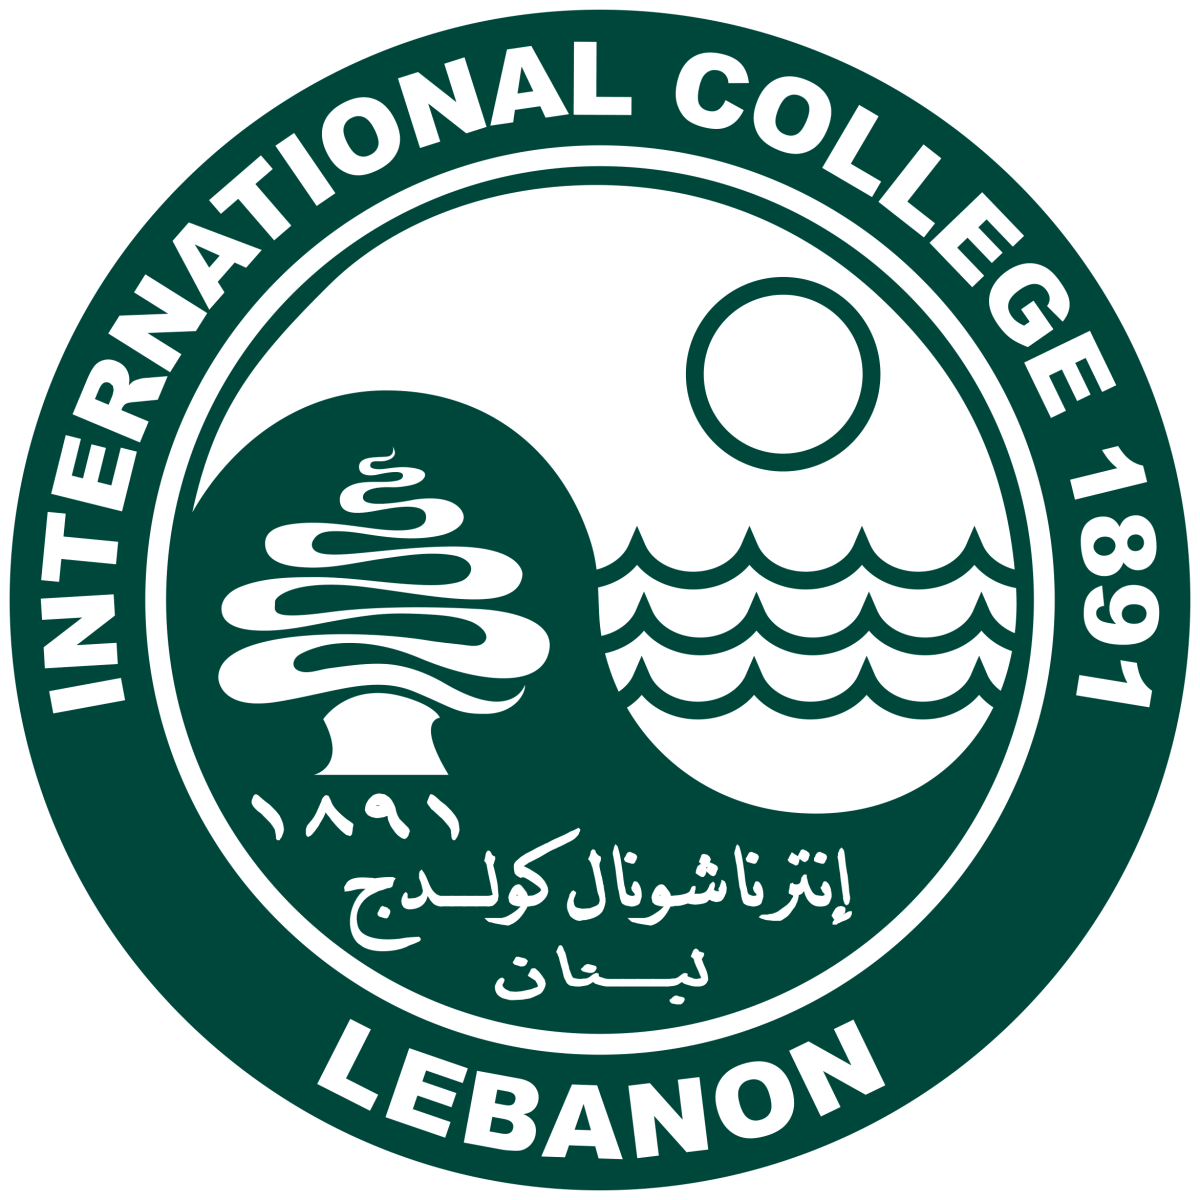 Nursery logo International College